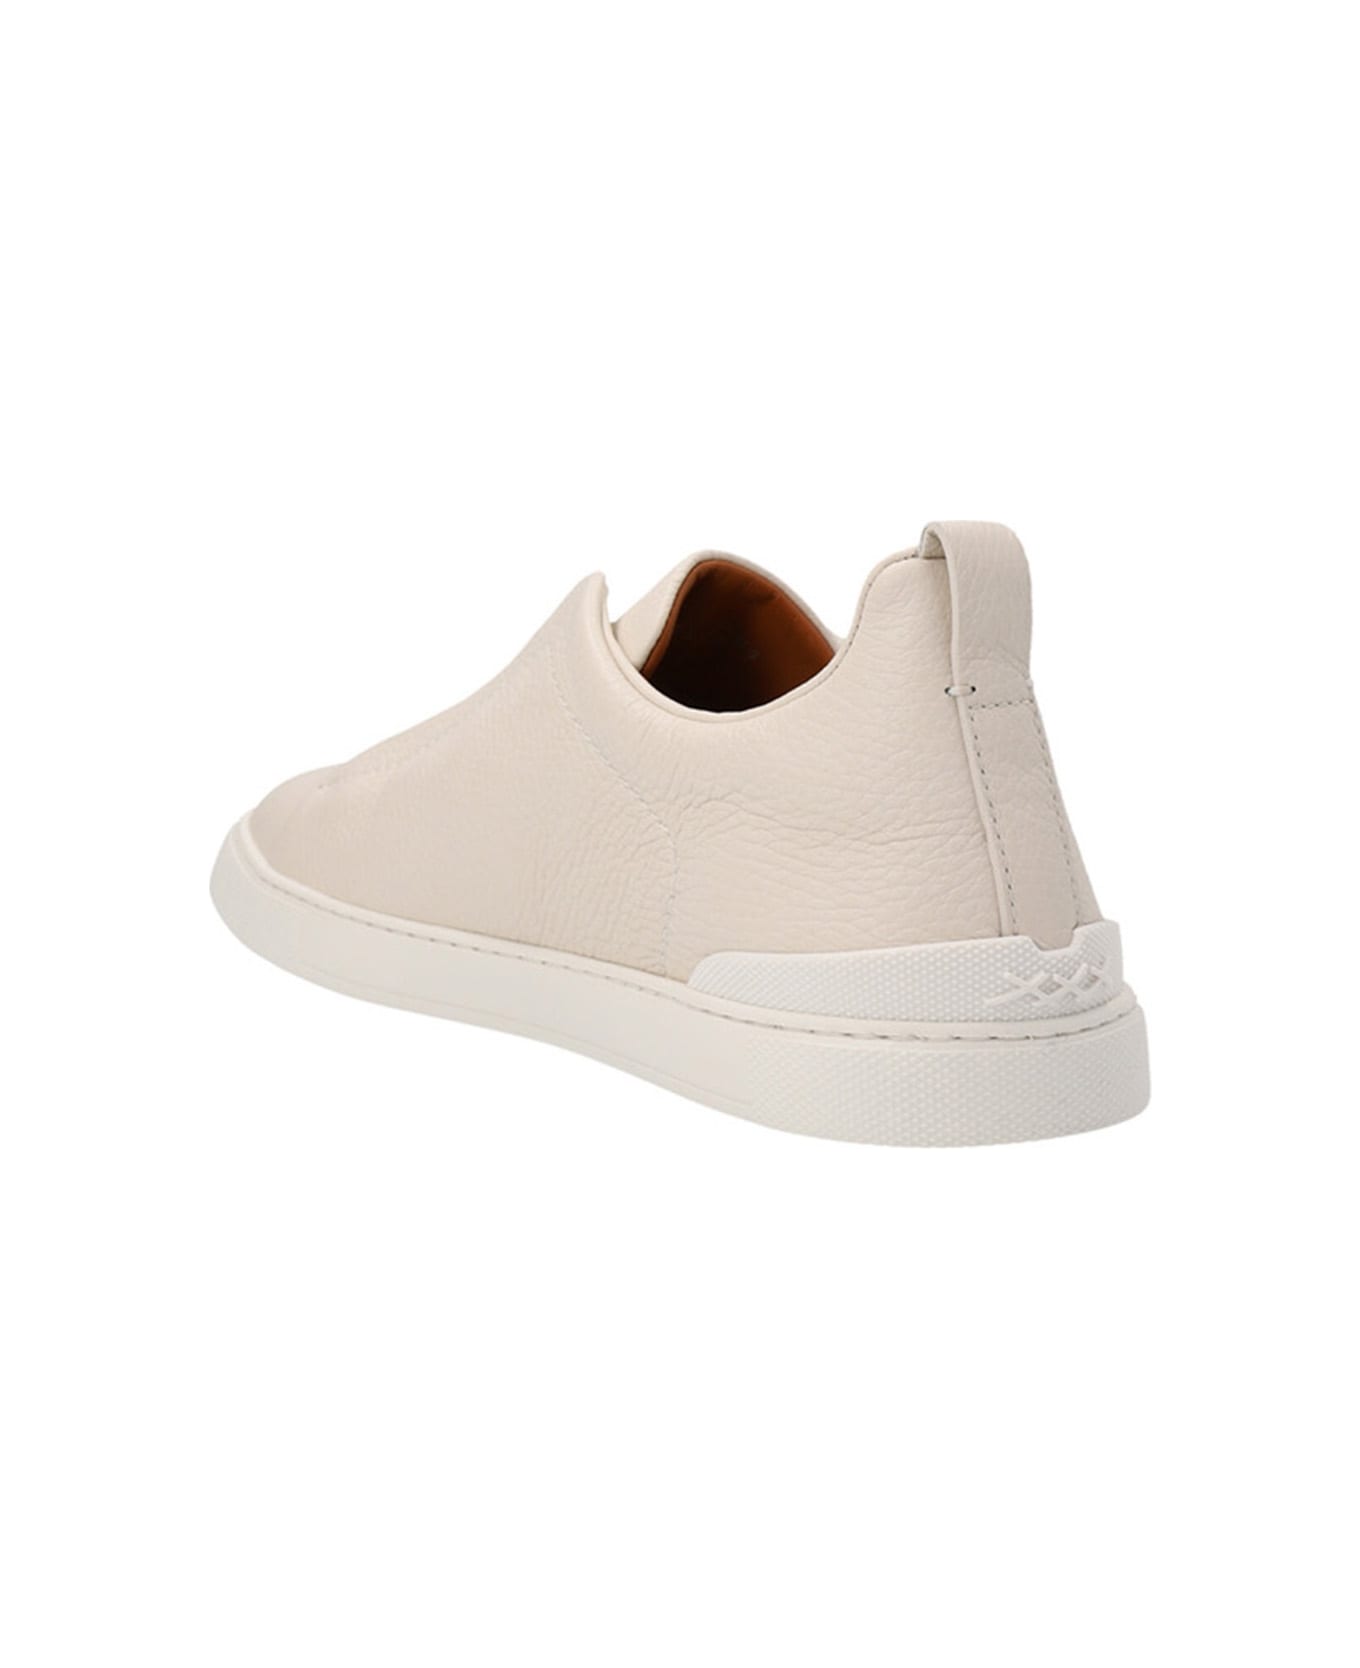 Zegna 'triple Stitch' Sneakers - White スニーカー